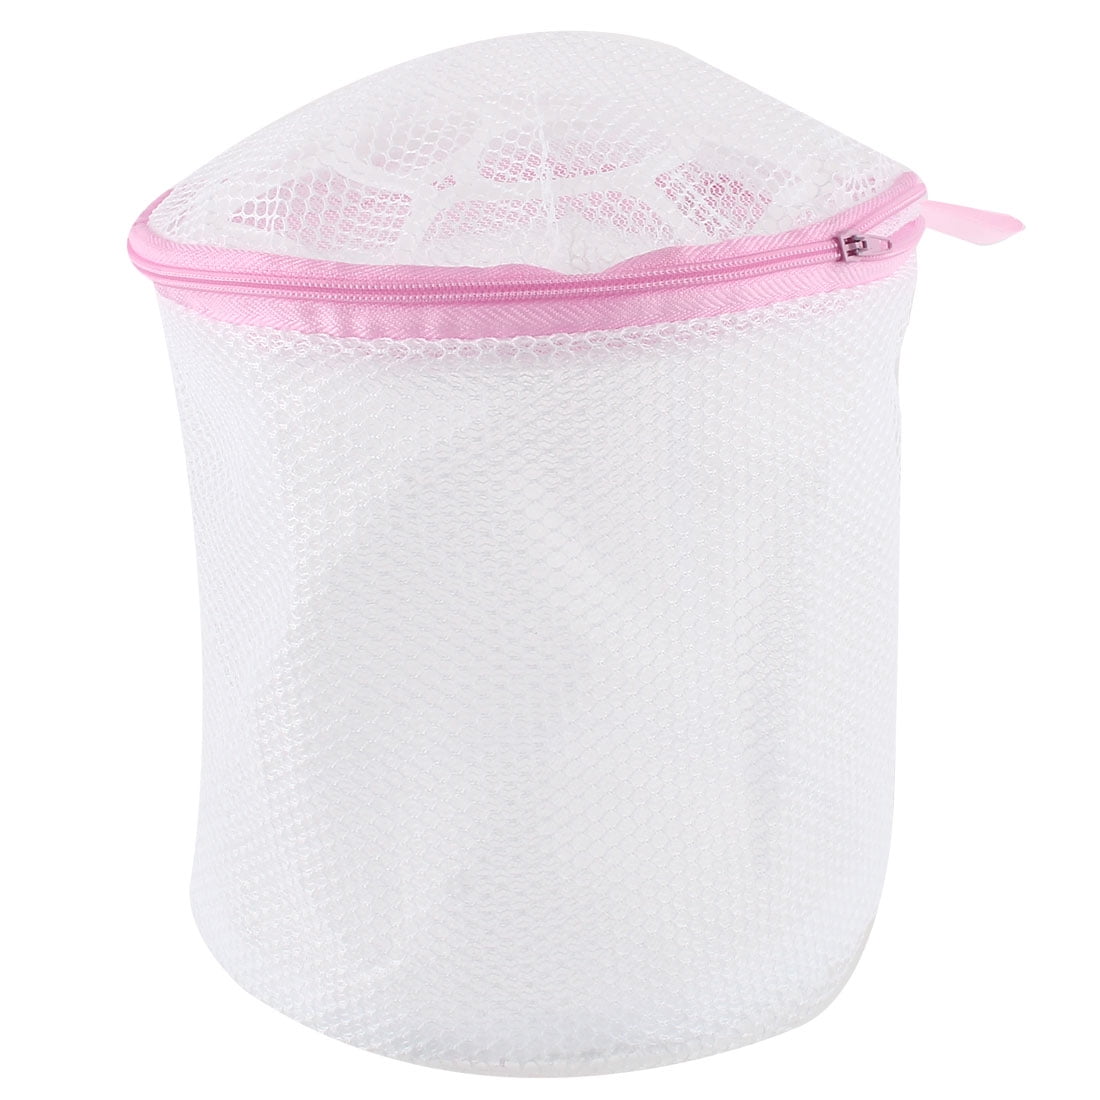 Underwear Aid Bra Laundry Bag Mesh Wash Basket Net Washing Storage Zipper Bag CA 